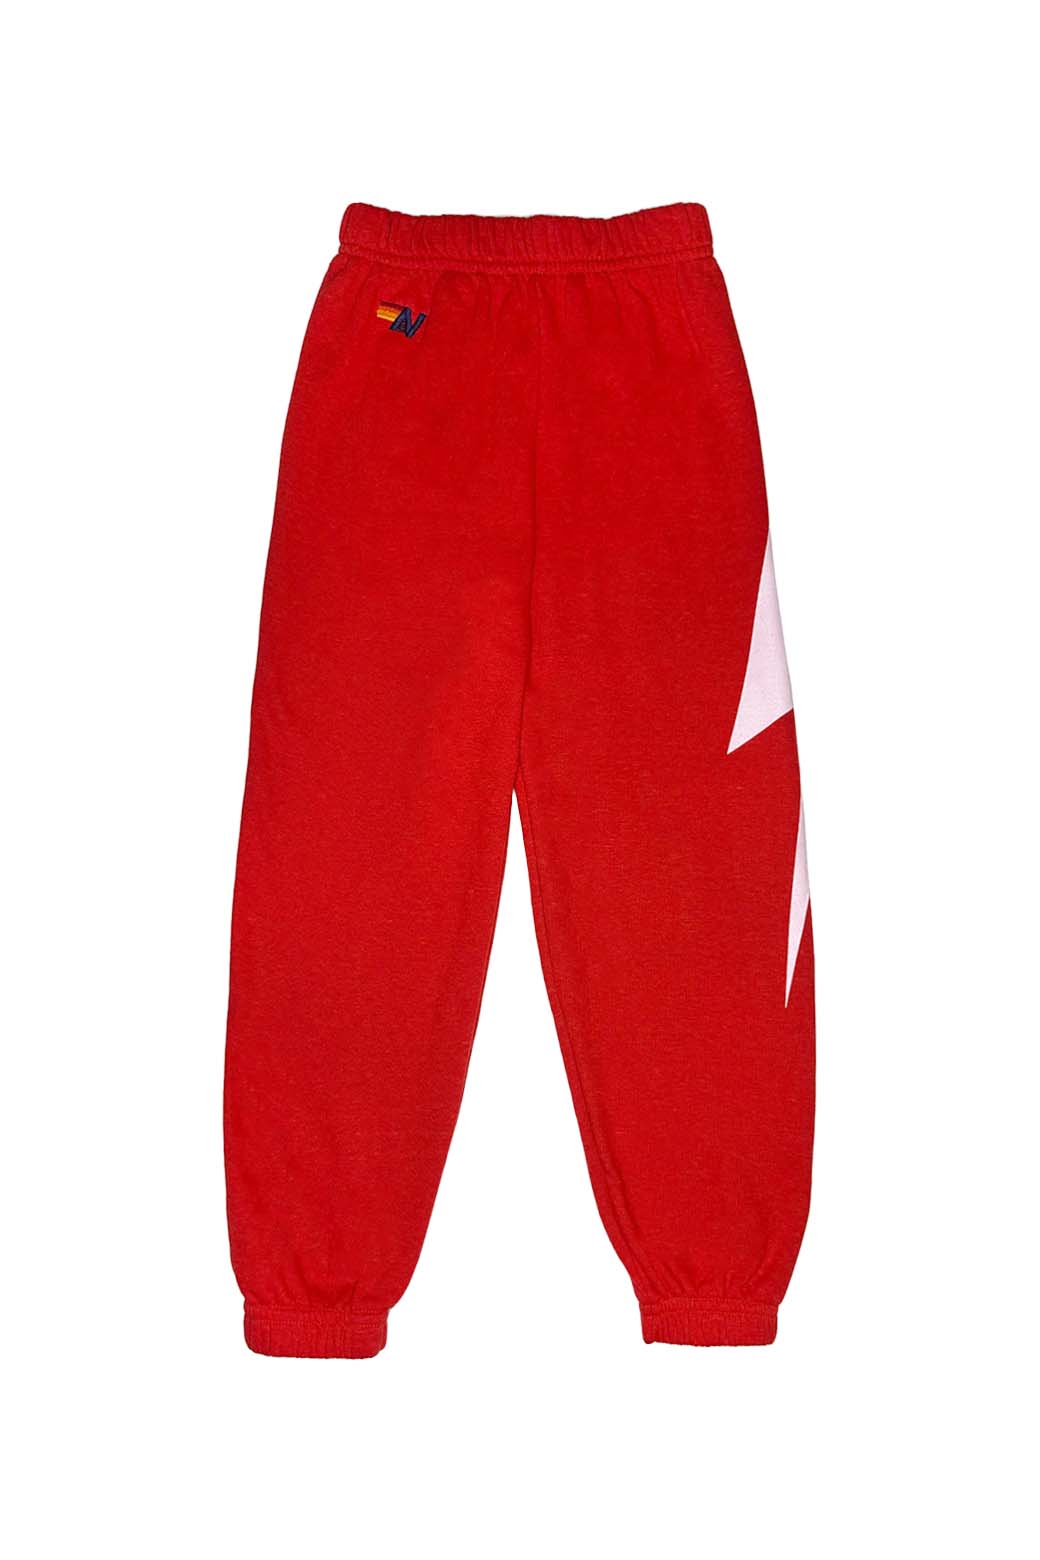 Copy of KIDS BOLT PRINT SWEATPANTS - RED Kid's Sweatpants Aviator Nation 